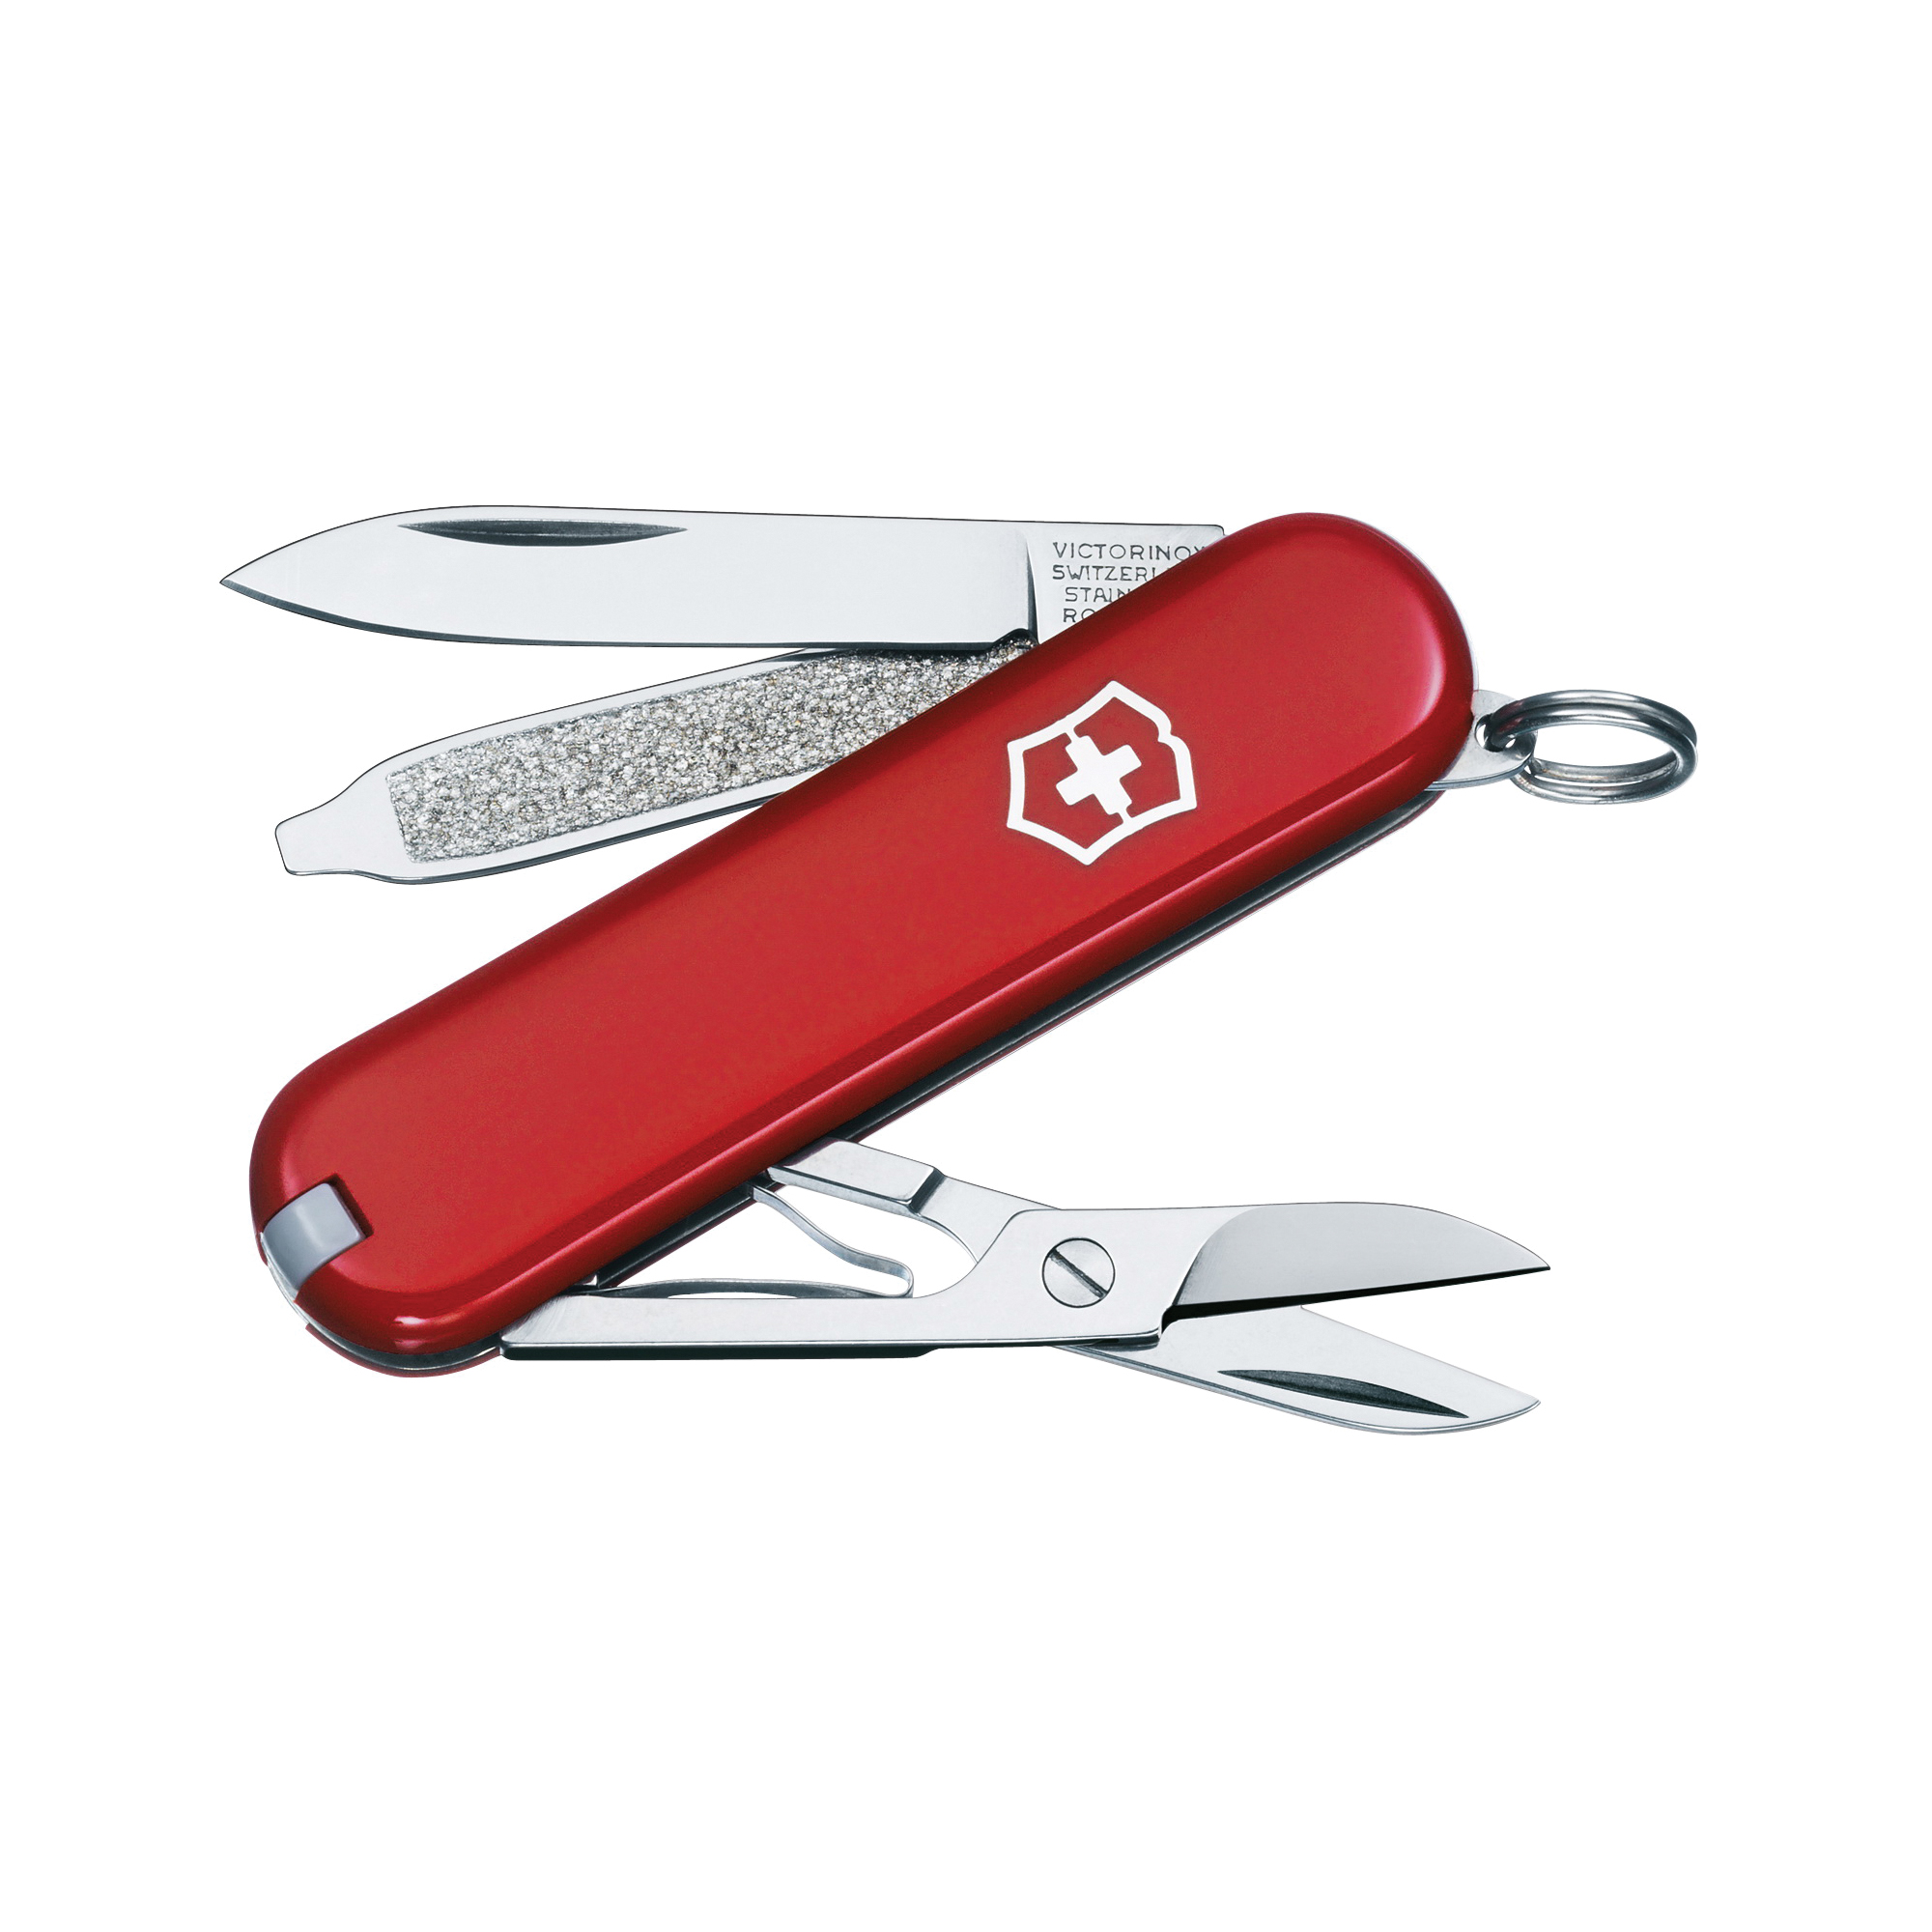 0.6223-033-X3 Multi-Tool Knife, Stainless Steel Blade, 7-Blade, Red Handle